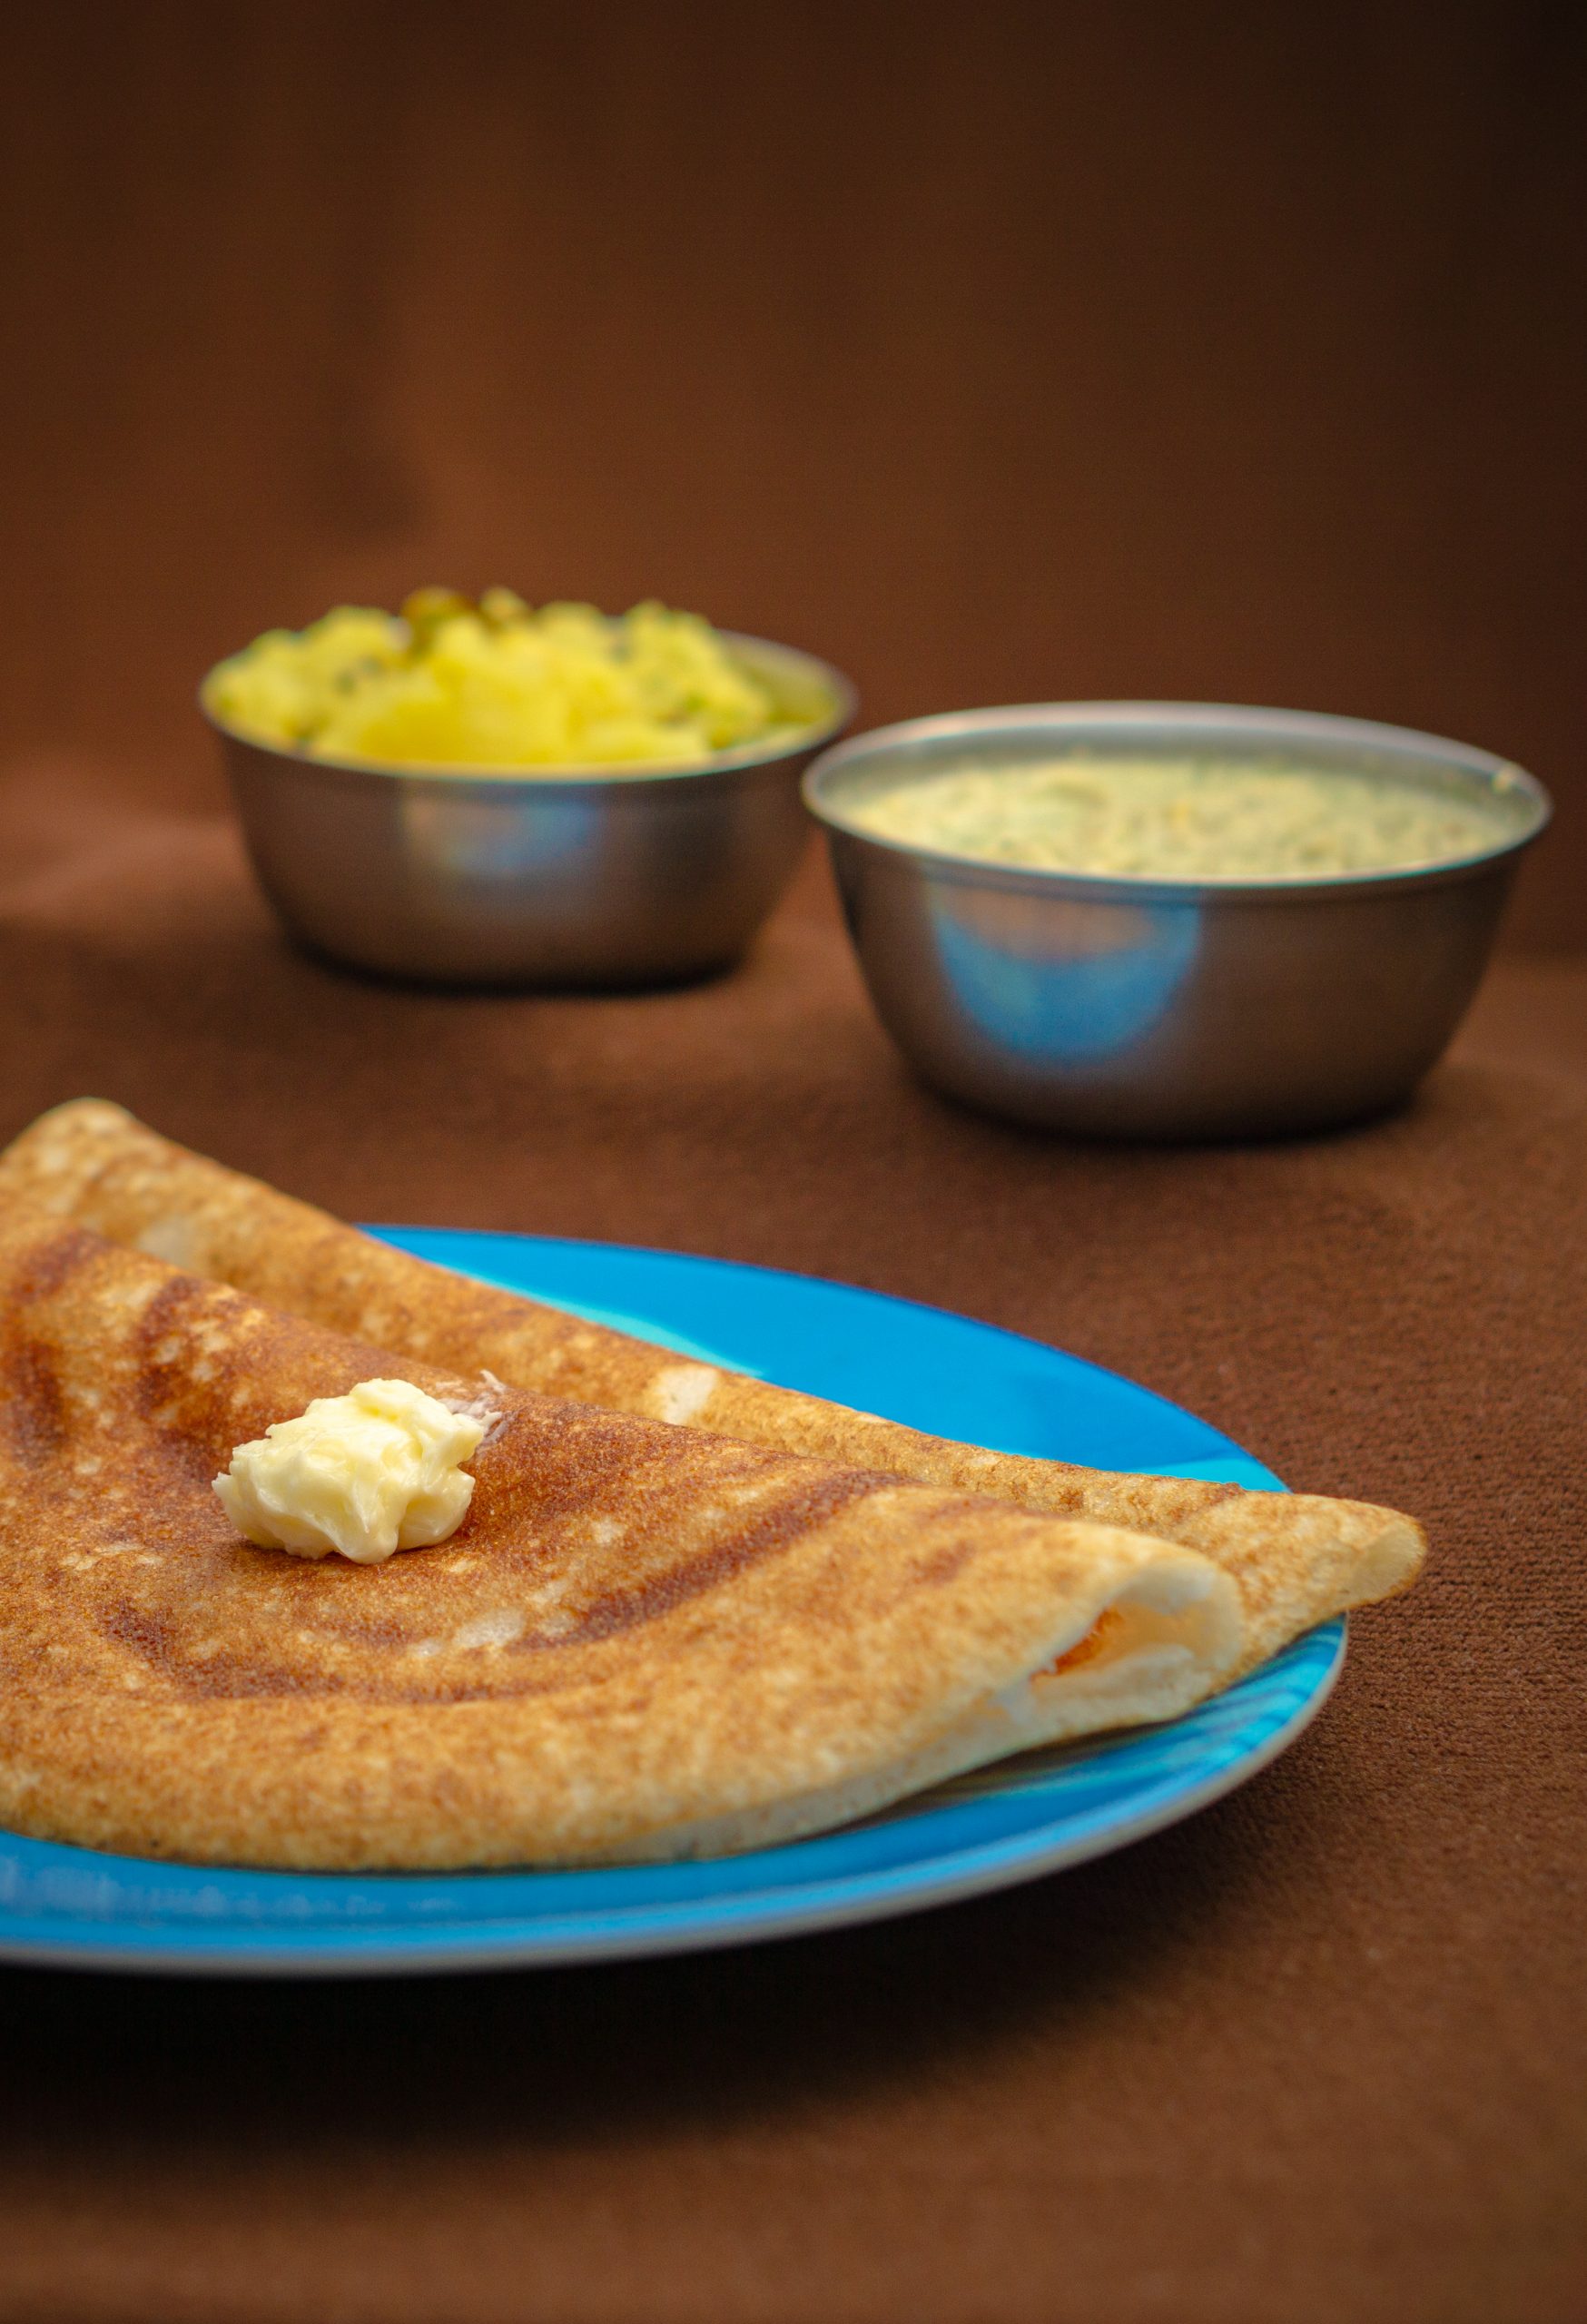 Indian breakfast